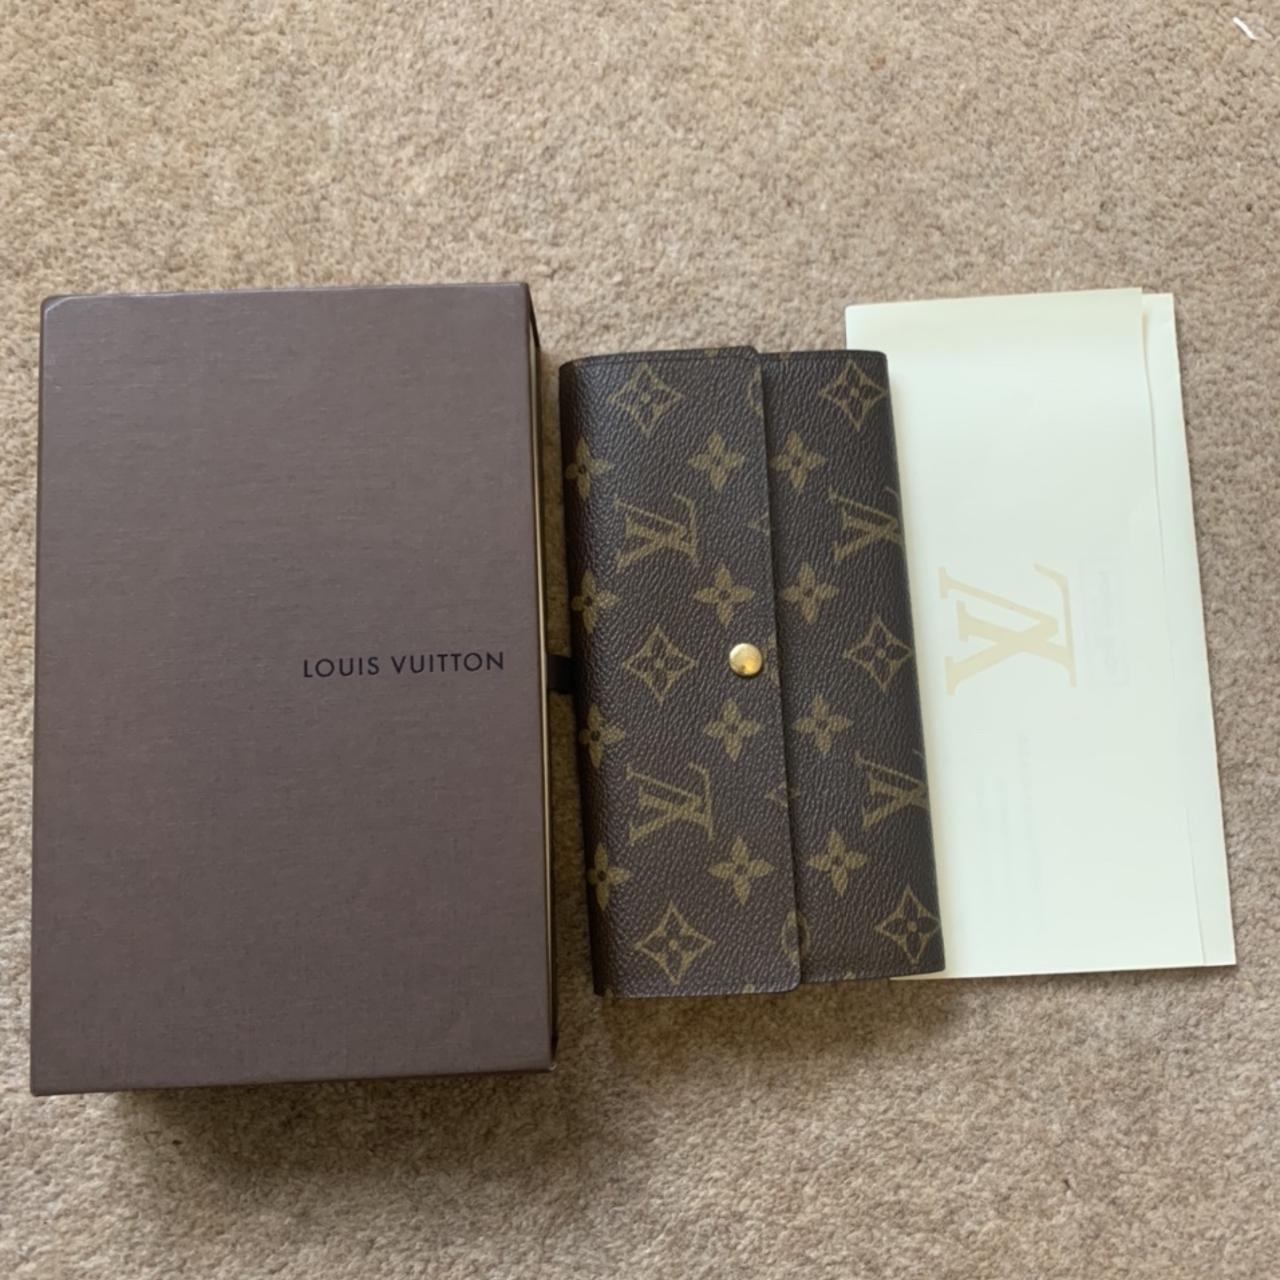 Original Louis Vuitton Purse Box and Dust - Depop